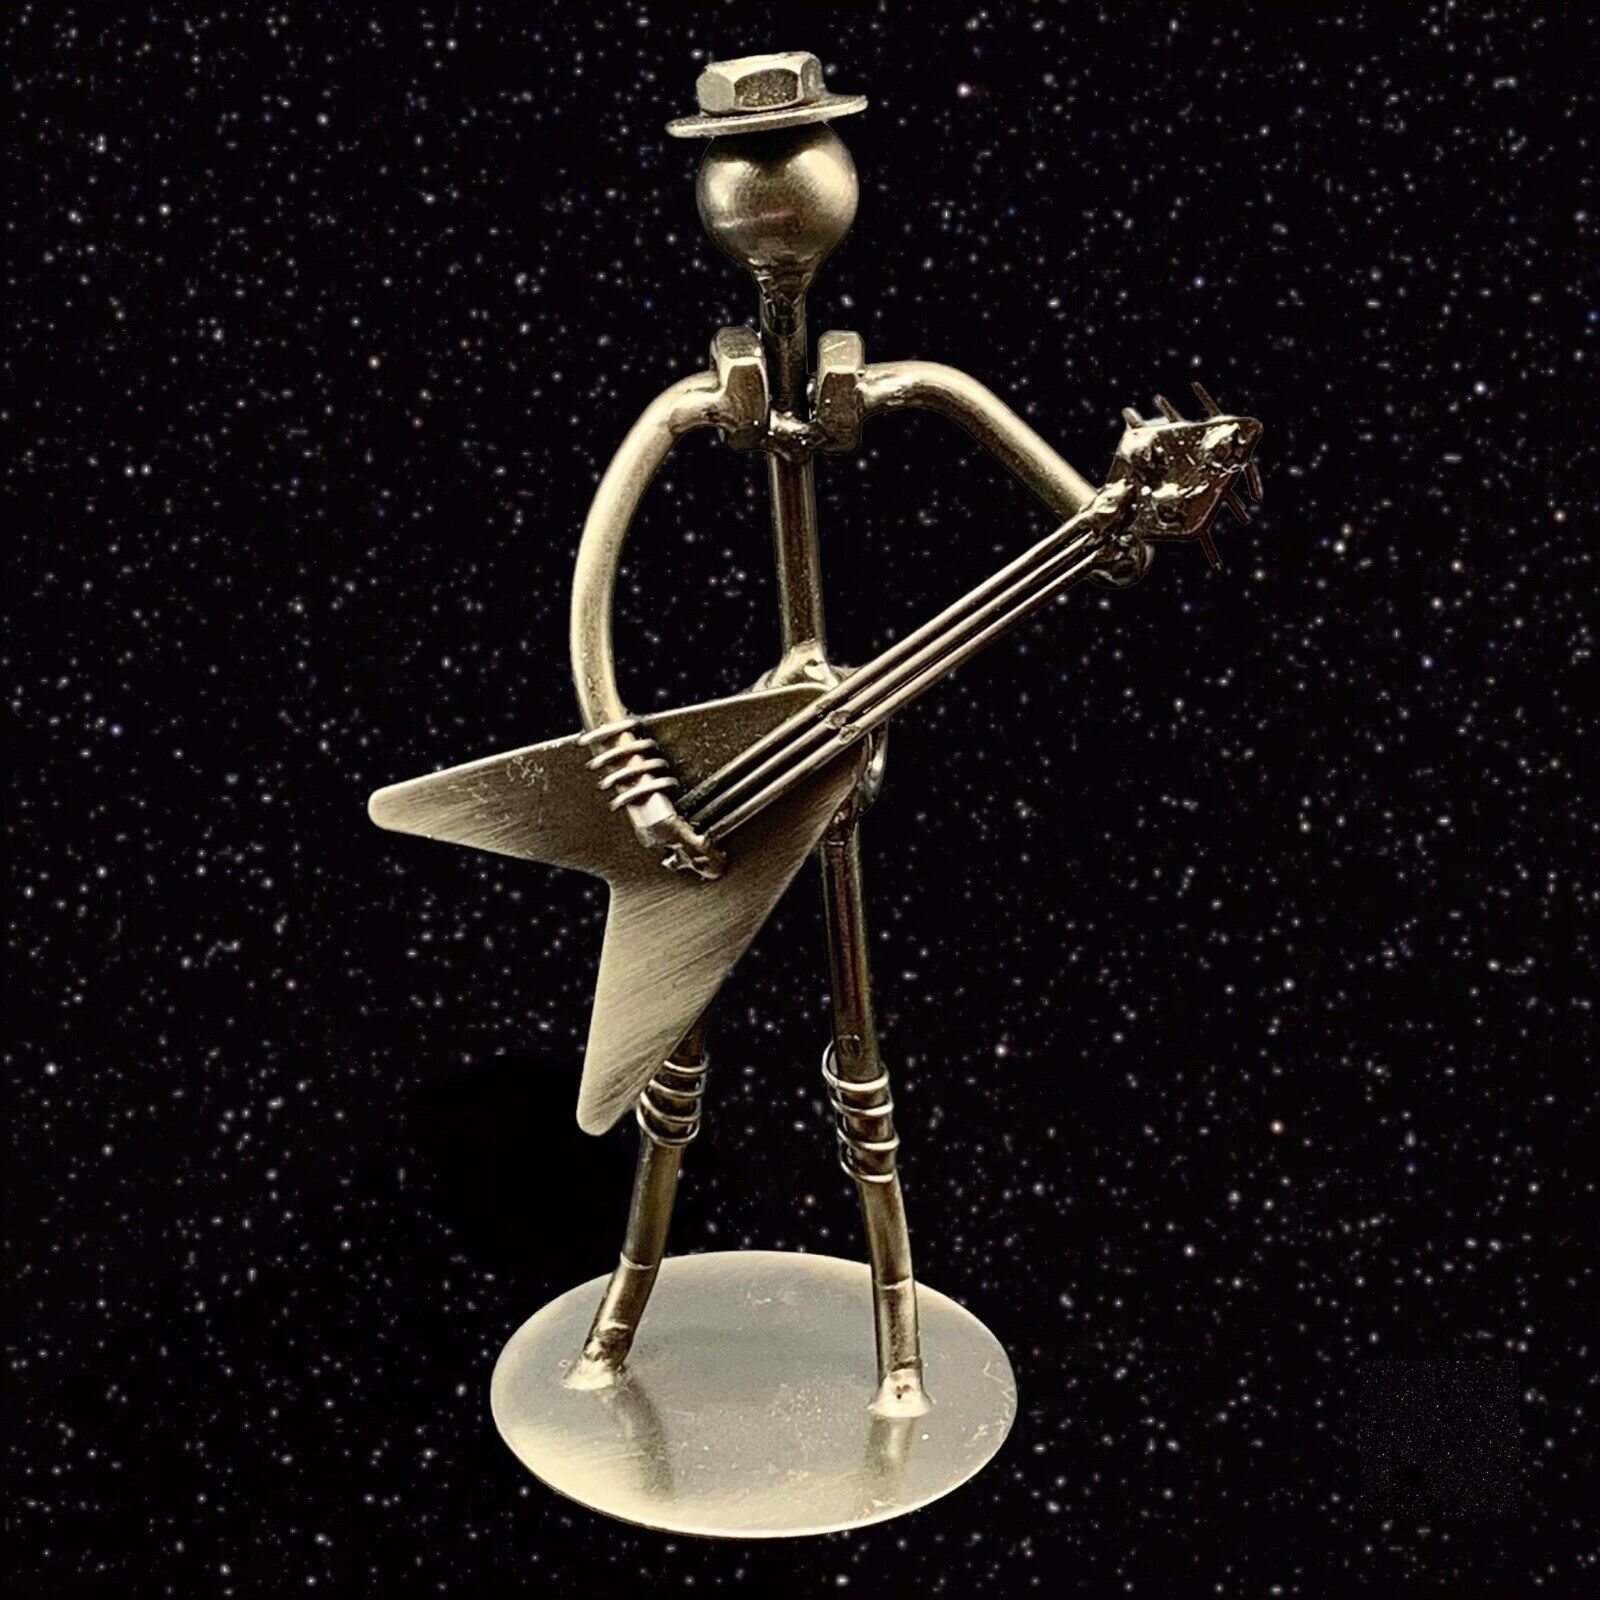 Vintage Handmade Metal Nut & Bolt Rockstar Guitar Sculpture Figure 6.5”T 5”W